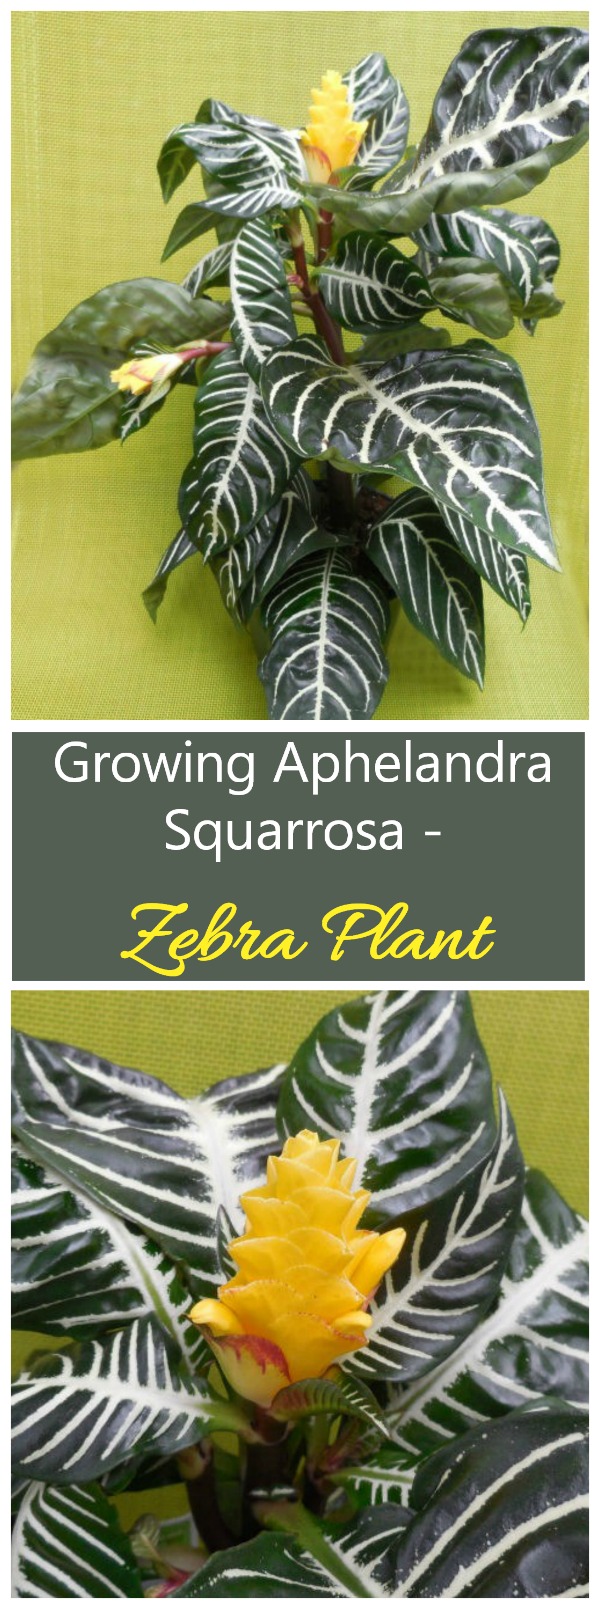 Planta cebra - Consejos para el cultivo de Aphelandra Squarrosa